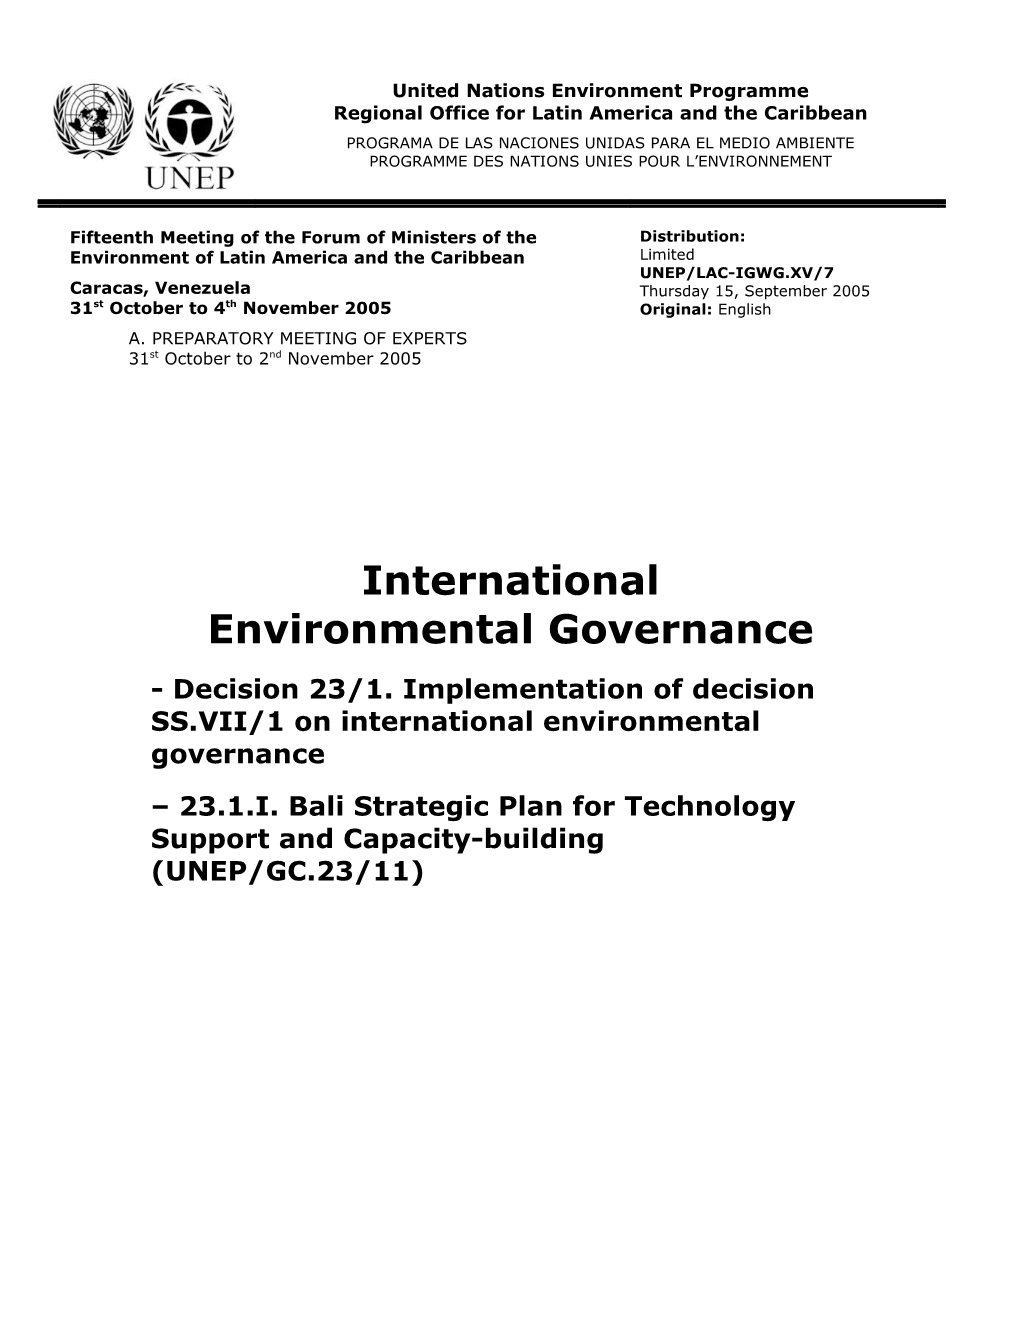 Decision 23/1. Implementation of Decision SS.VII/1 on International Environmental Governance